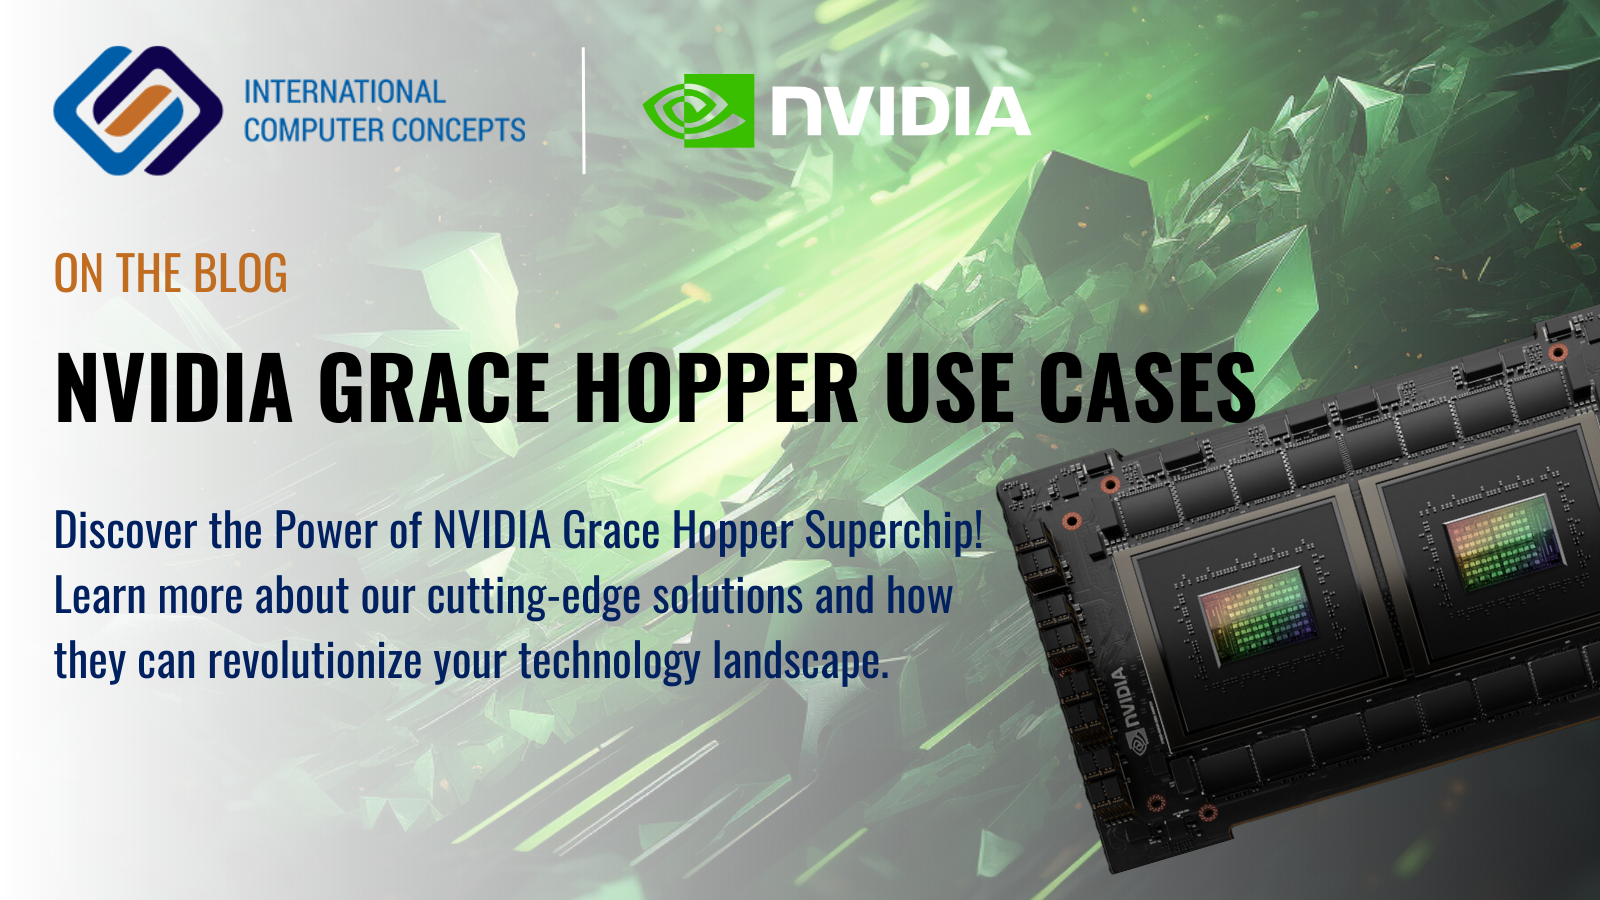 NVIDIA Grace Hopper Use Cases